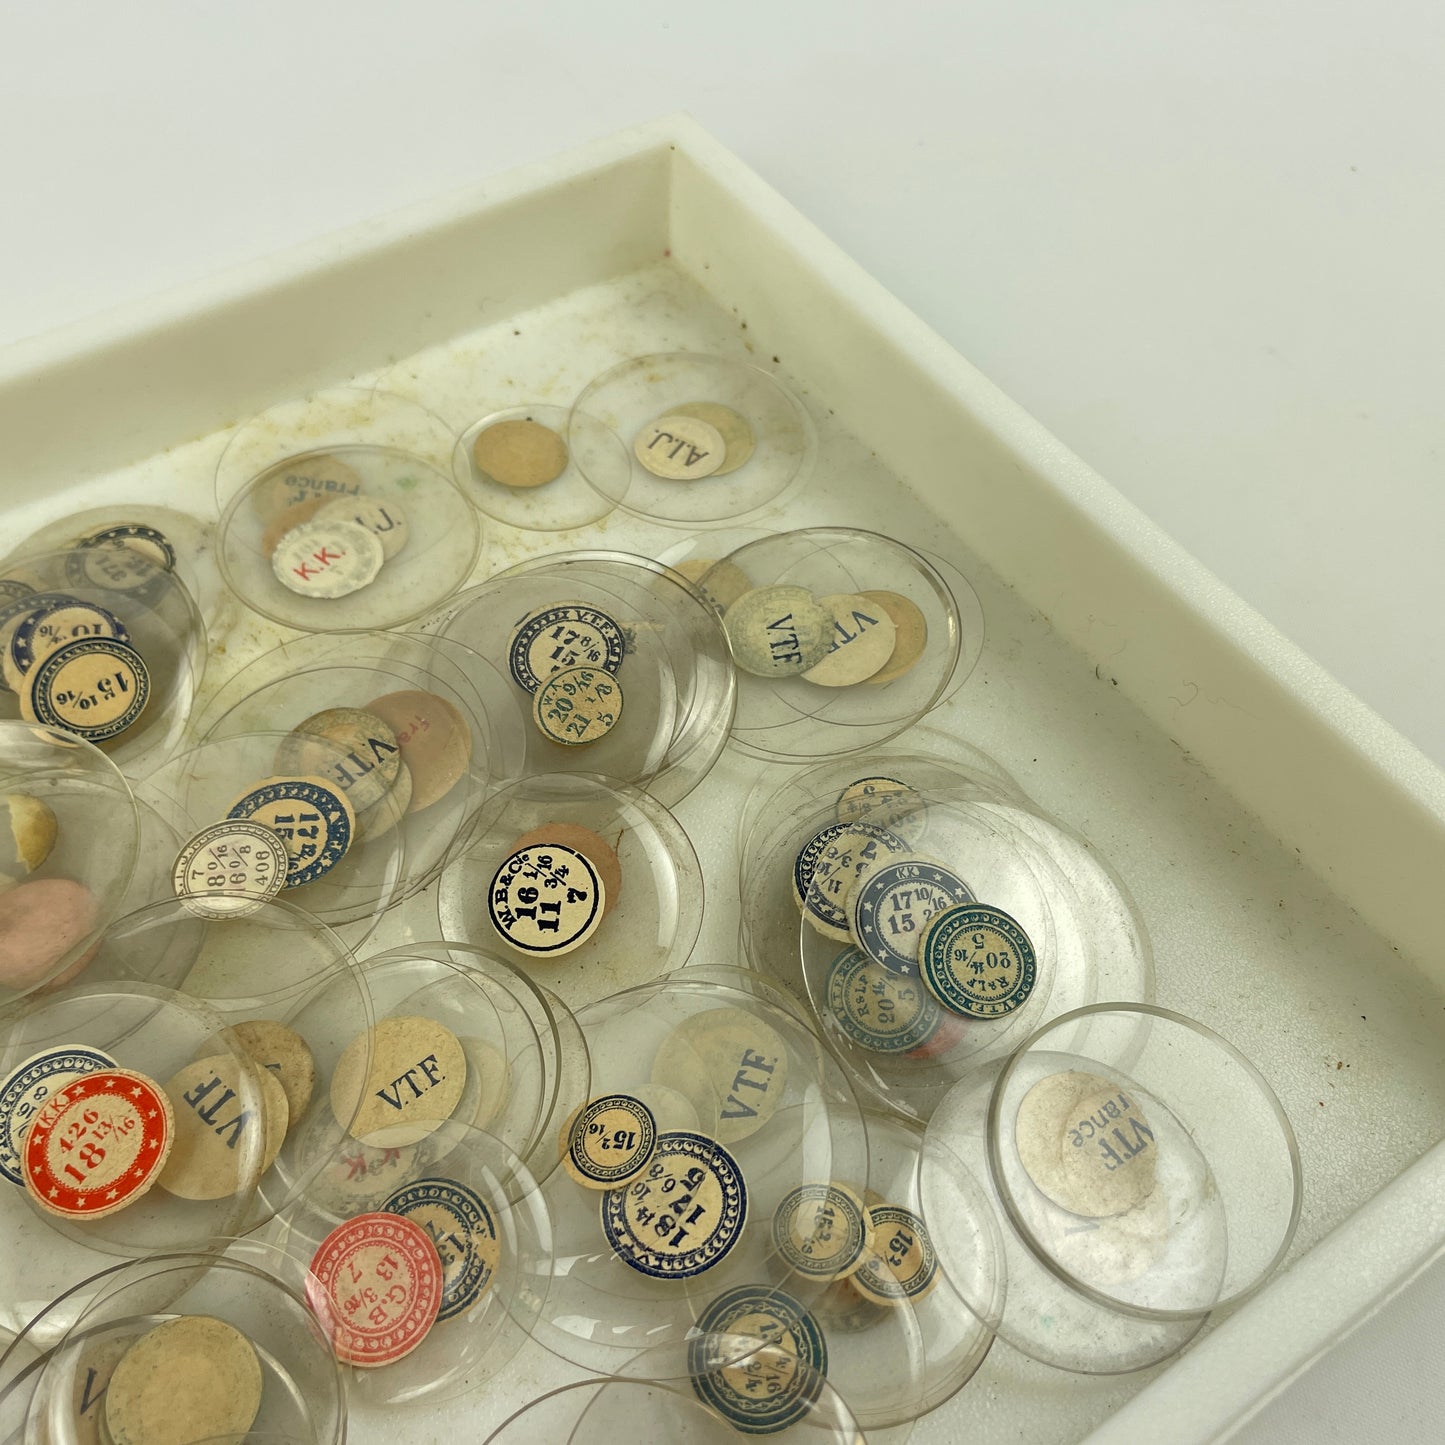 Apr Lot 127- Assortment of 200 Pocket Watch Glass Crystals